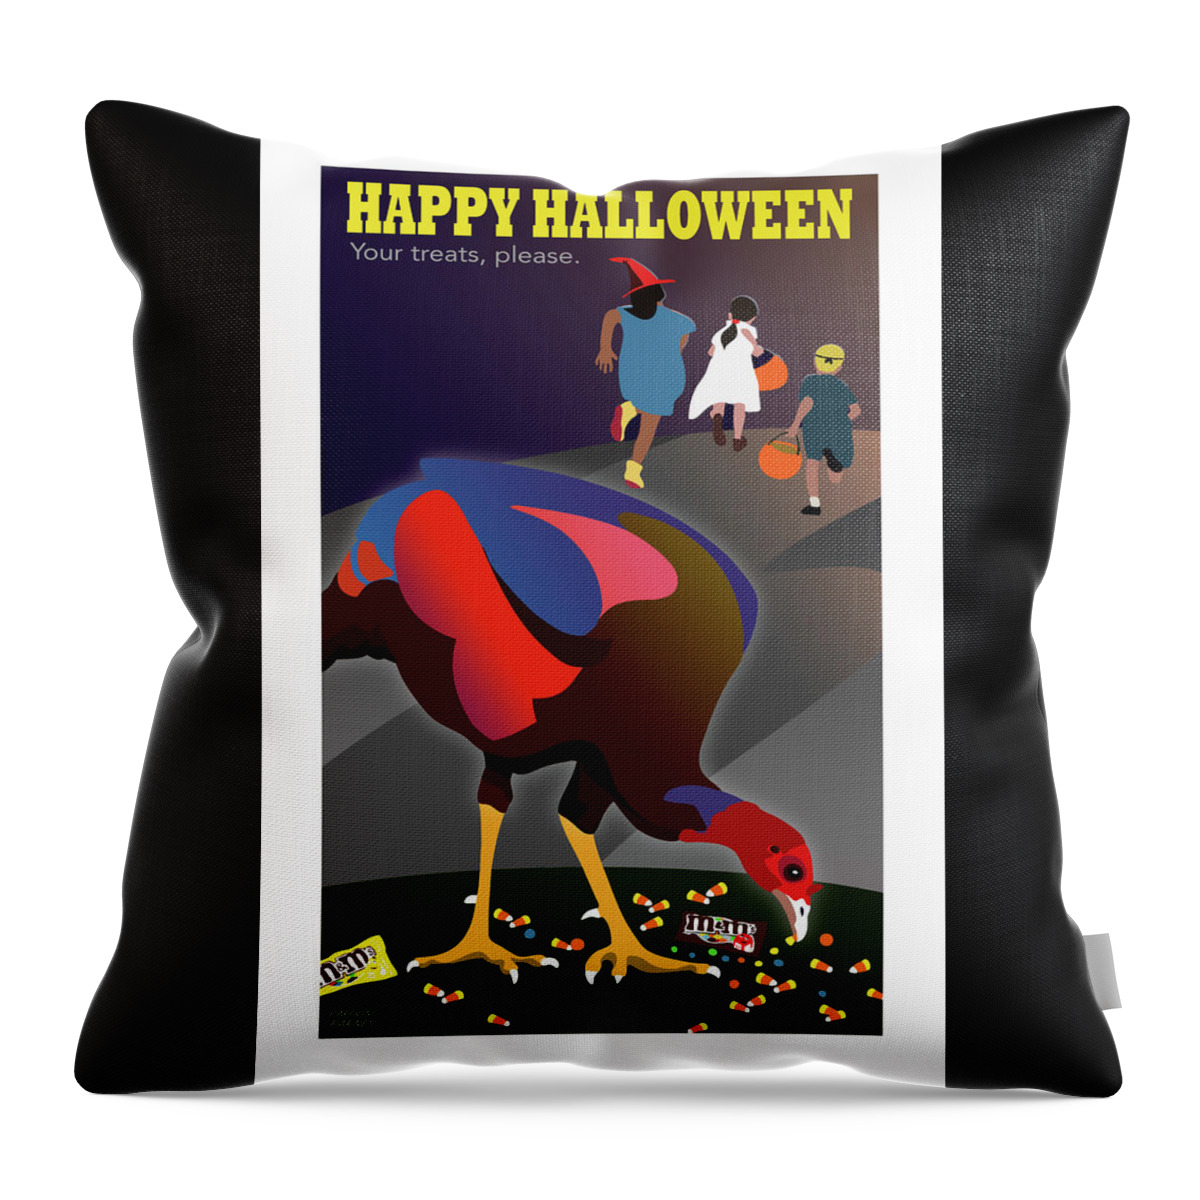 Halloween Throw Pillow featuring the digital art Happy Halloween by Caroline Barnes